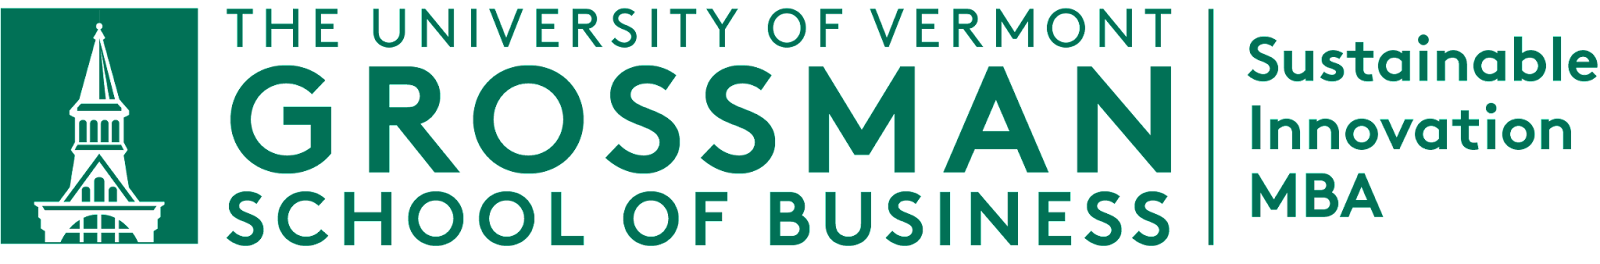 University of Vermont Grossman School of Business - Sustainable Innovation MBA